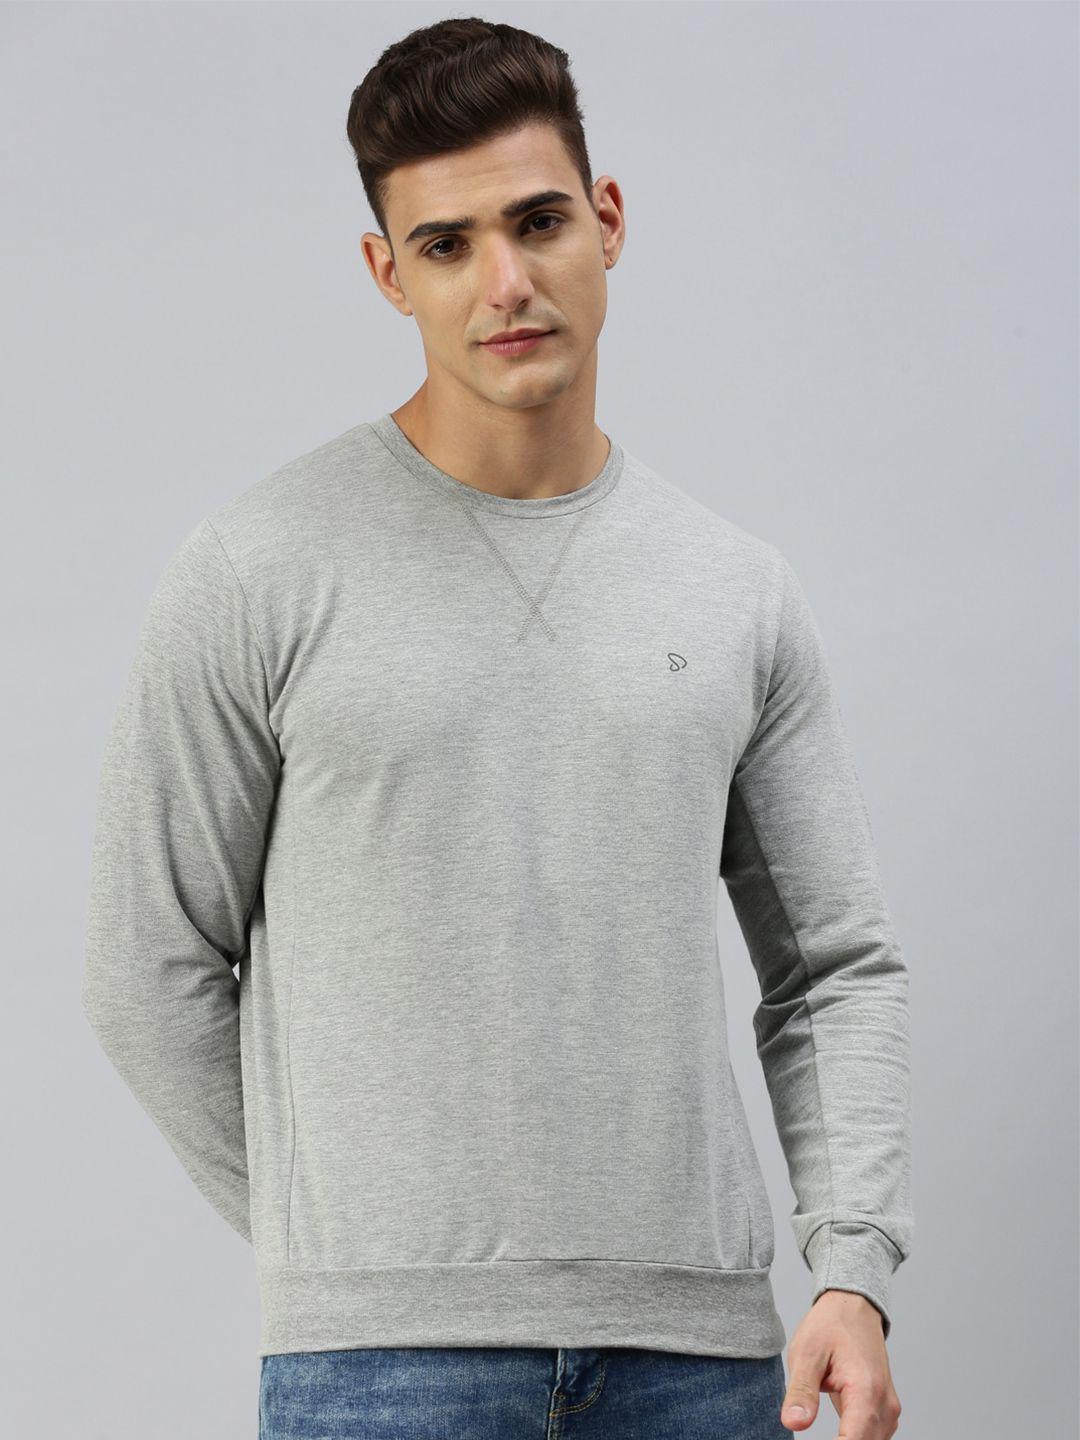 sporto cotton pullover sweatshirt